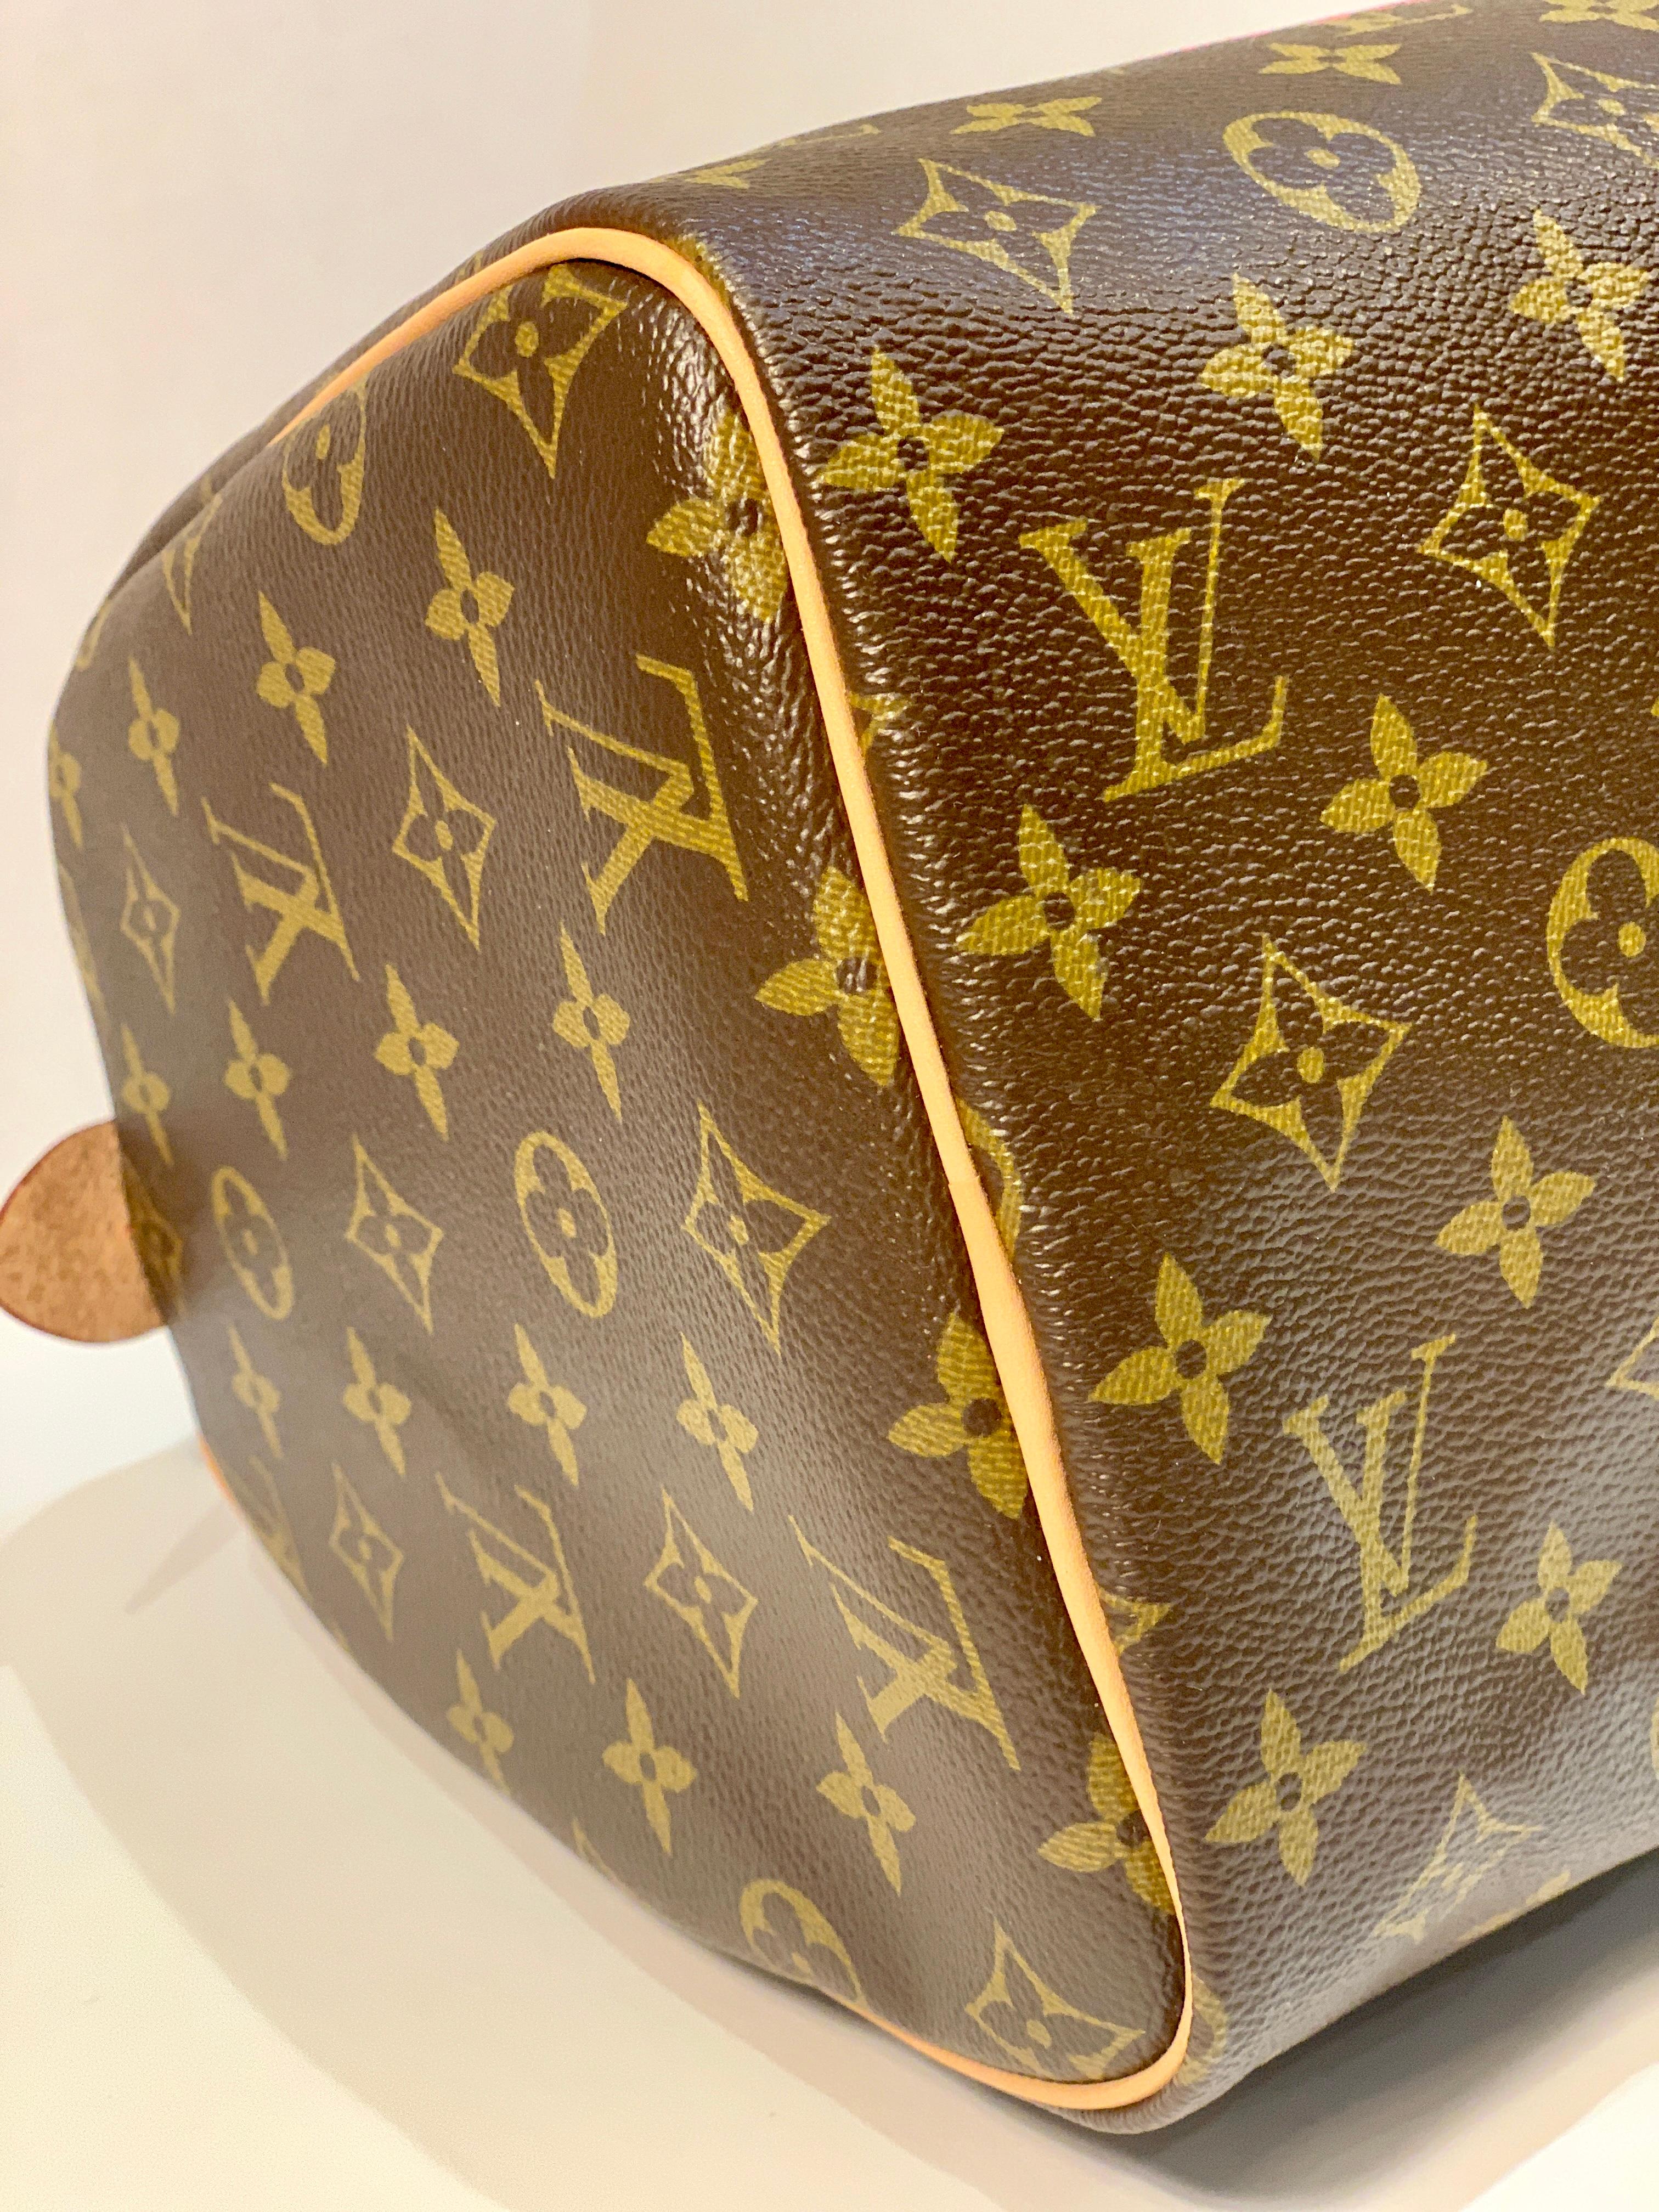 Iconic Louis Vuitton Speedy 30 Handbag Limited Edition Grenade V Monogram Canvas 2